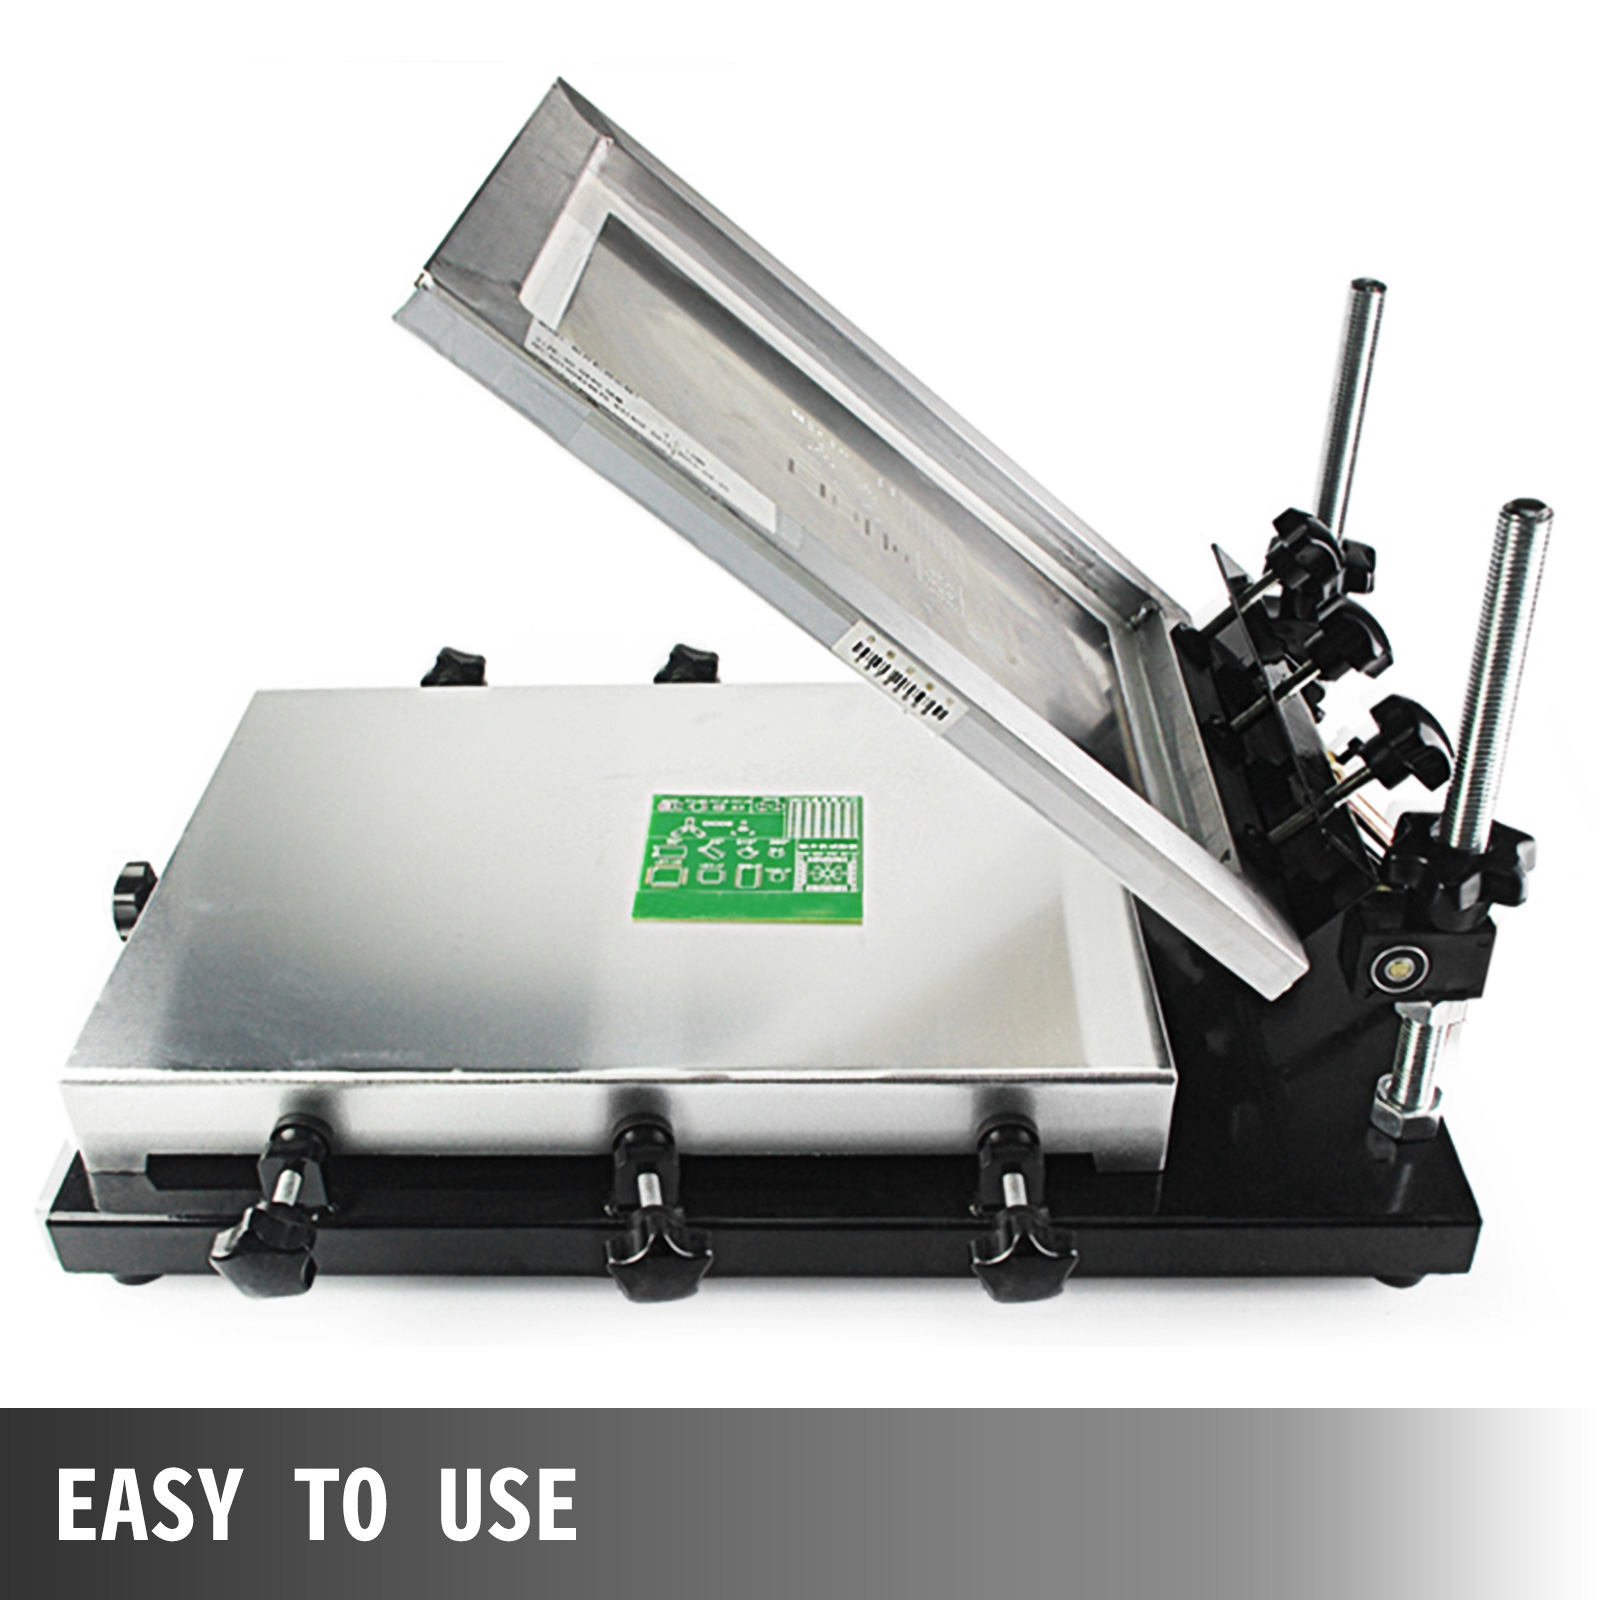 New Manual solder paste printer PCB SMT stencil printer size 440x320mm Fast Ship 